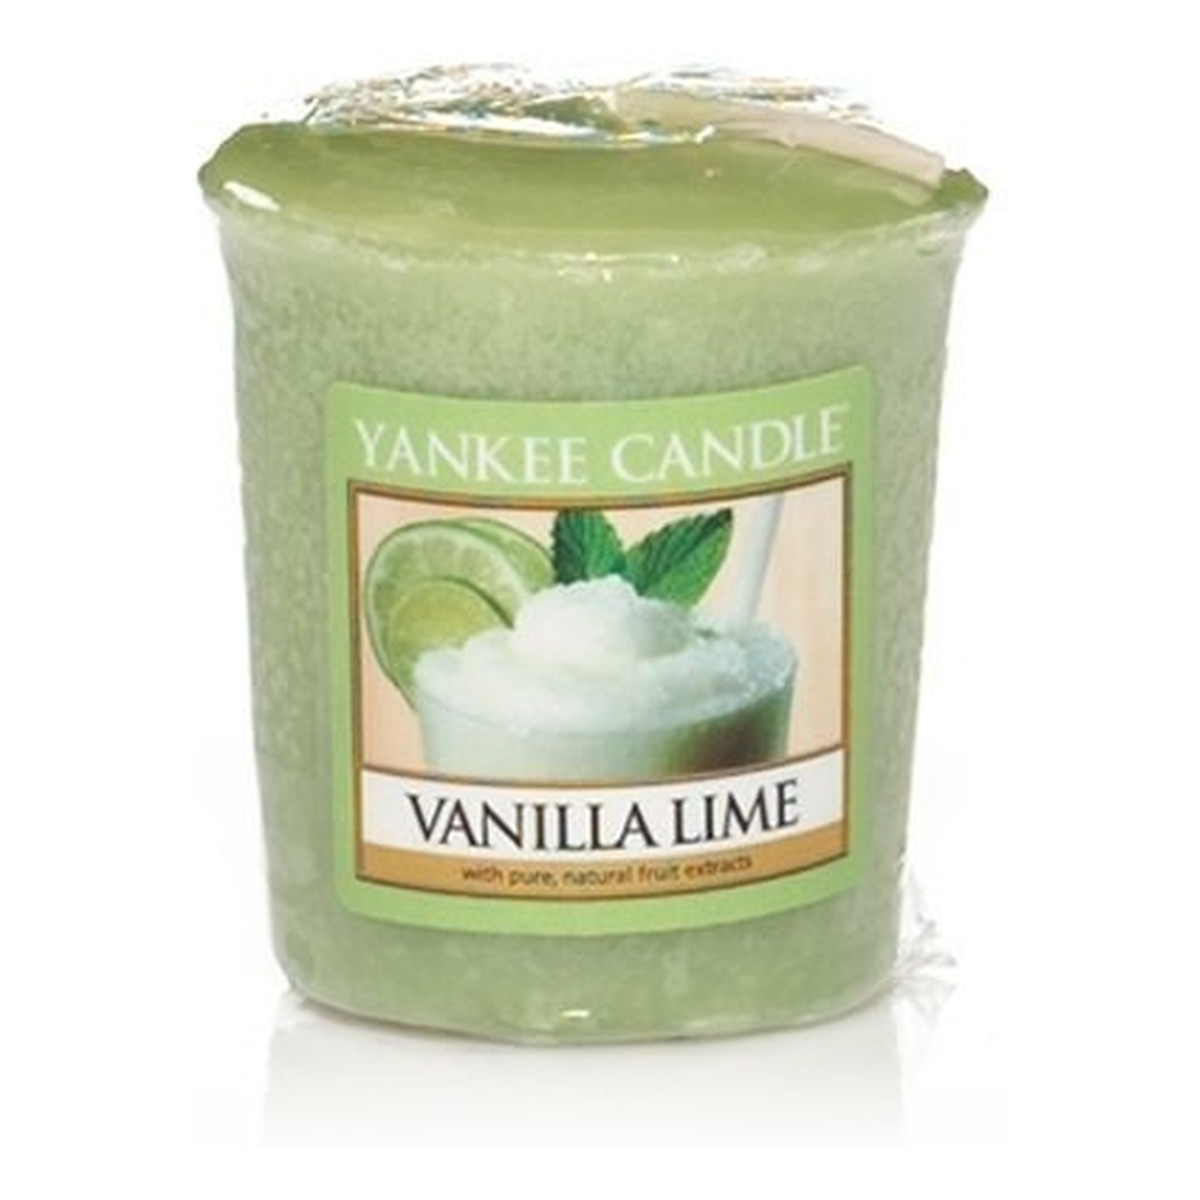 Yankee Candle Świeca zapachowa sampler vanilla lime 49g